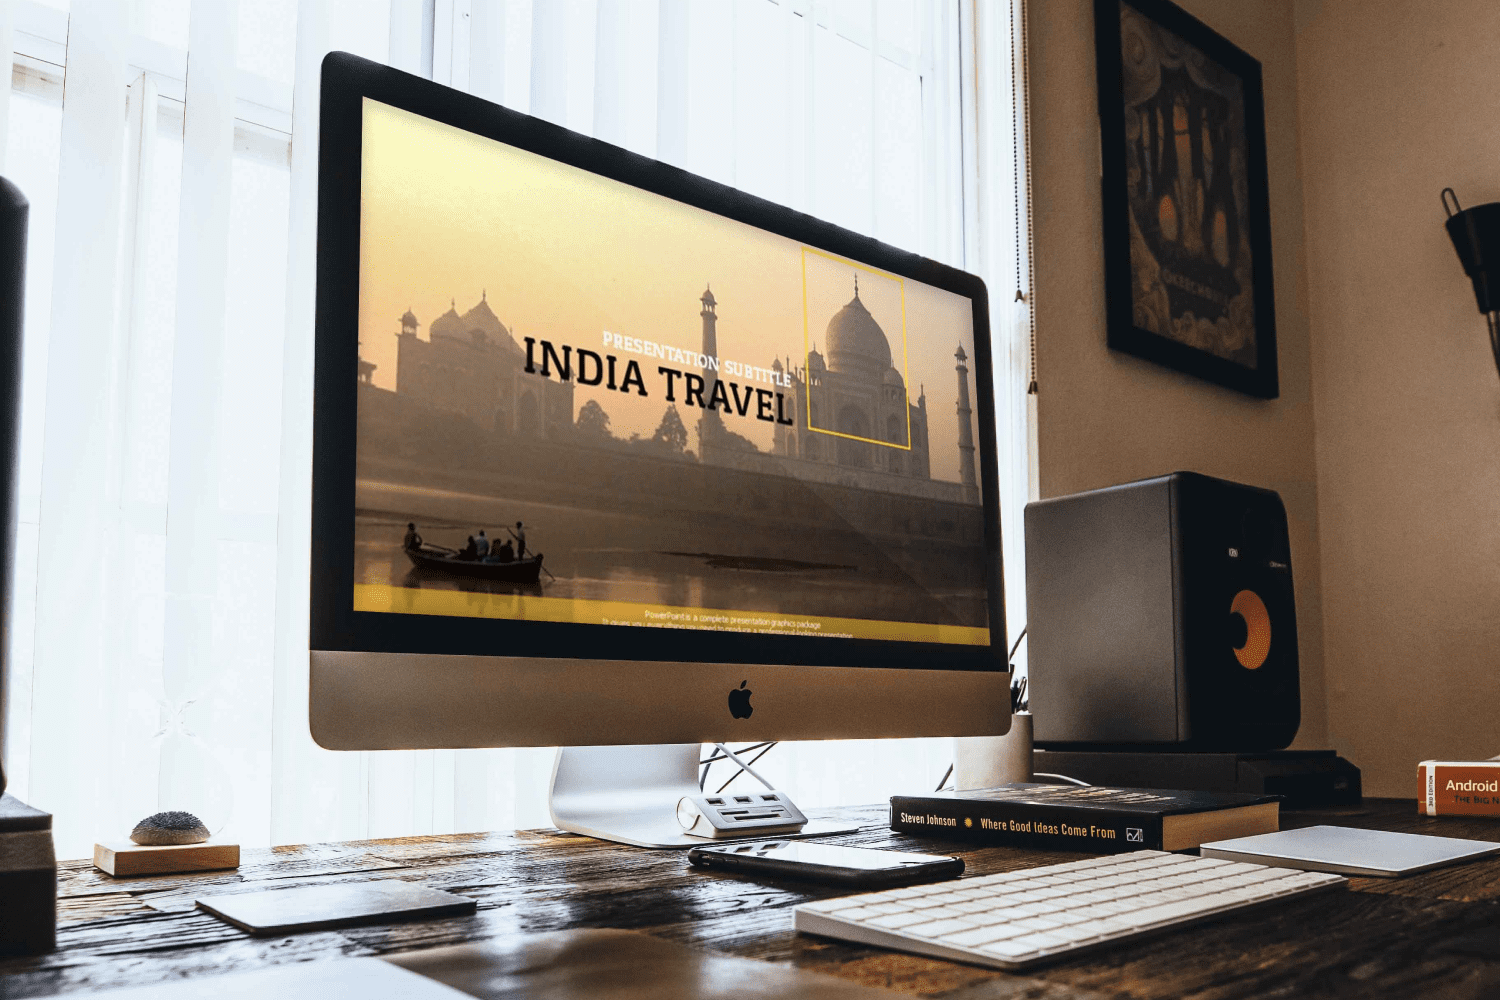 INDIA TRAVEL PowerPoint Presentation by MasterBundles Desktop preview mockup image.